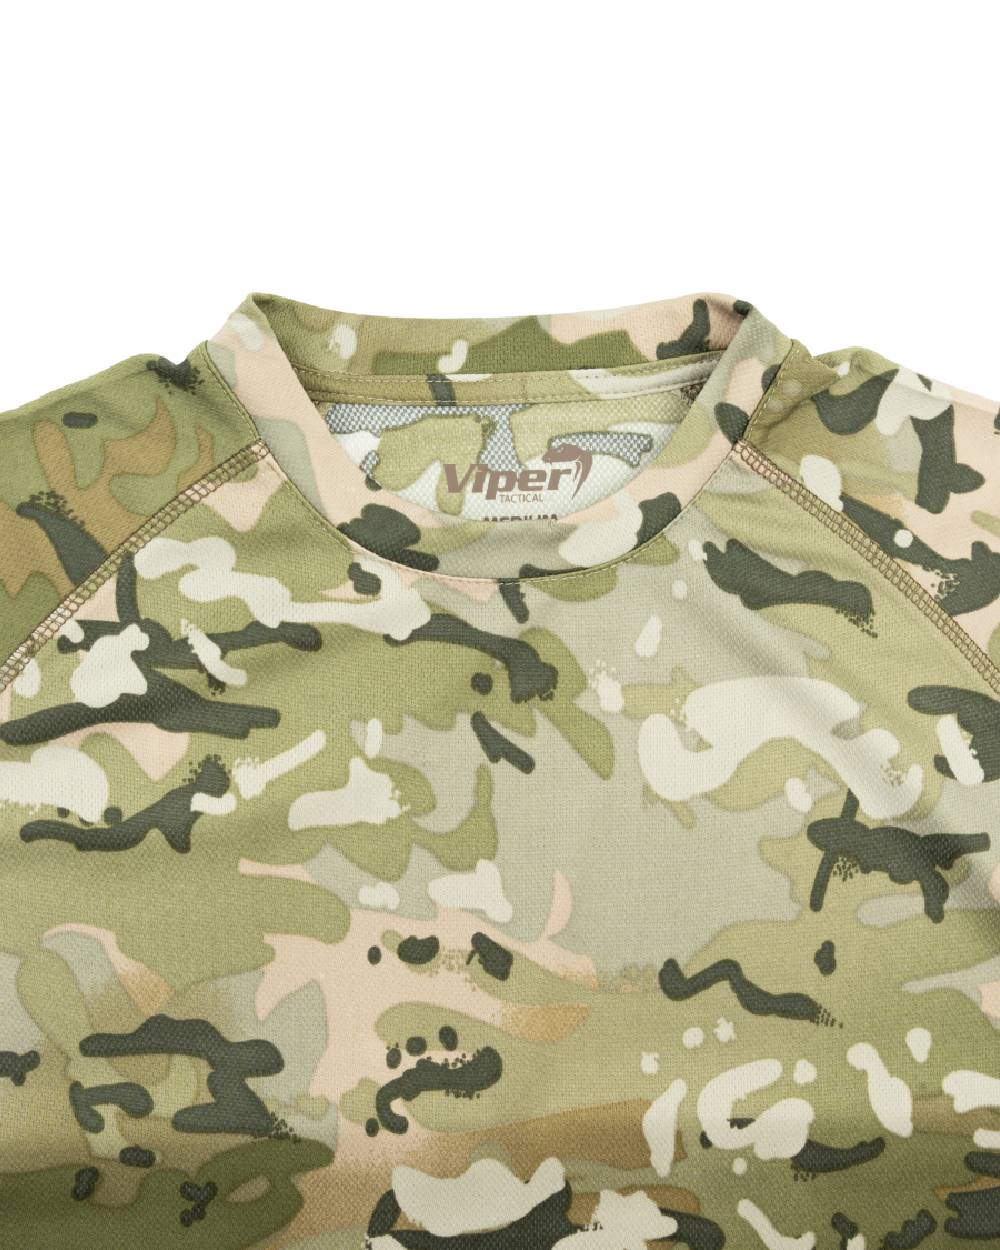 Viper Mesh-Tech T-Shirt in VCAM 